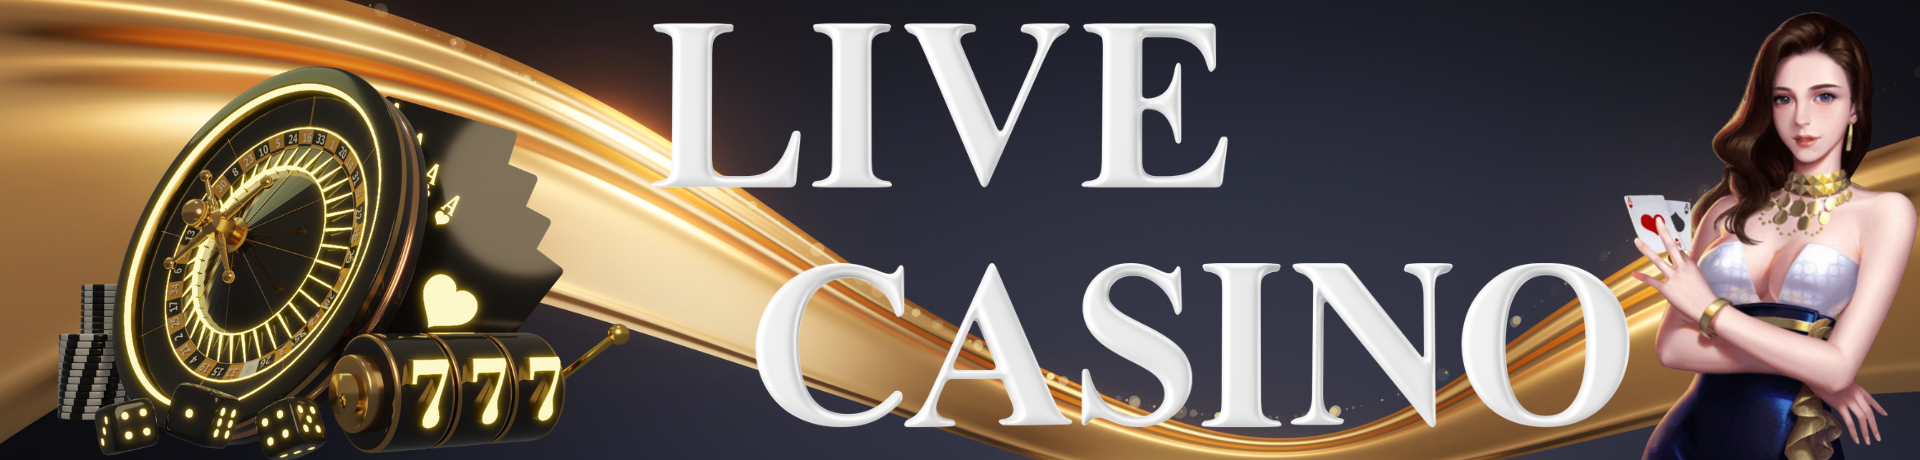 live_casino_banner